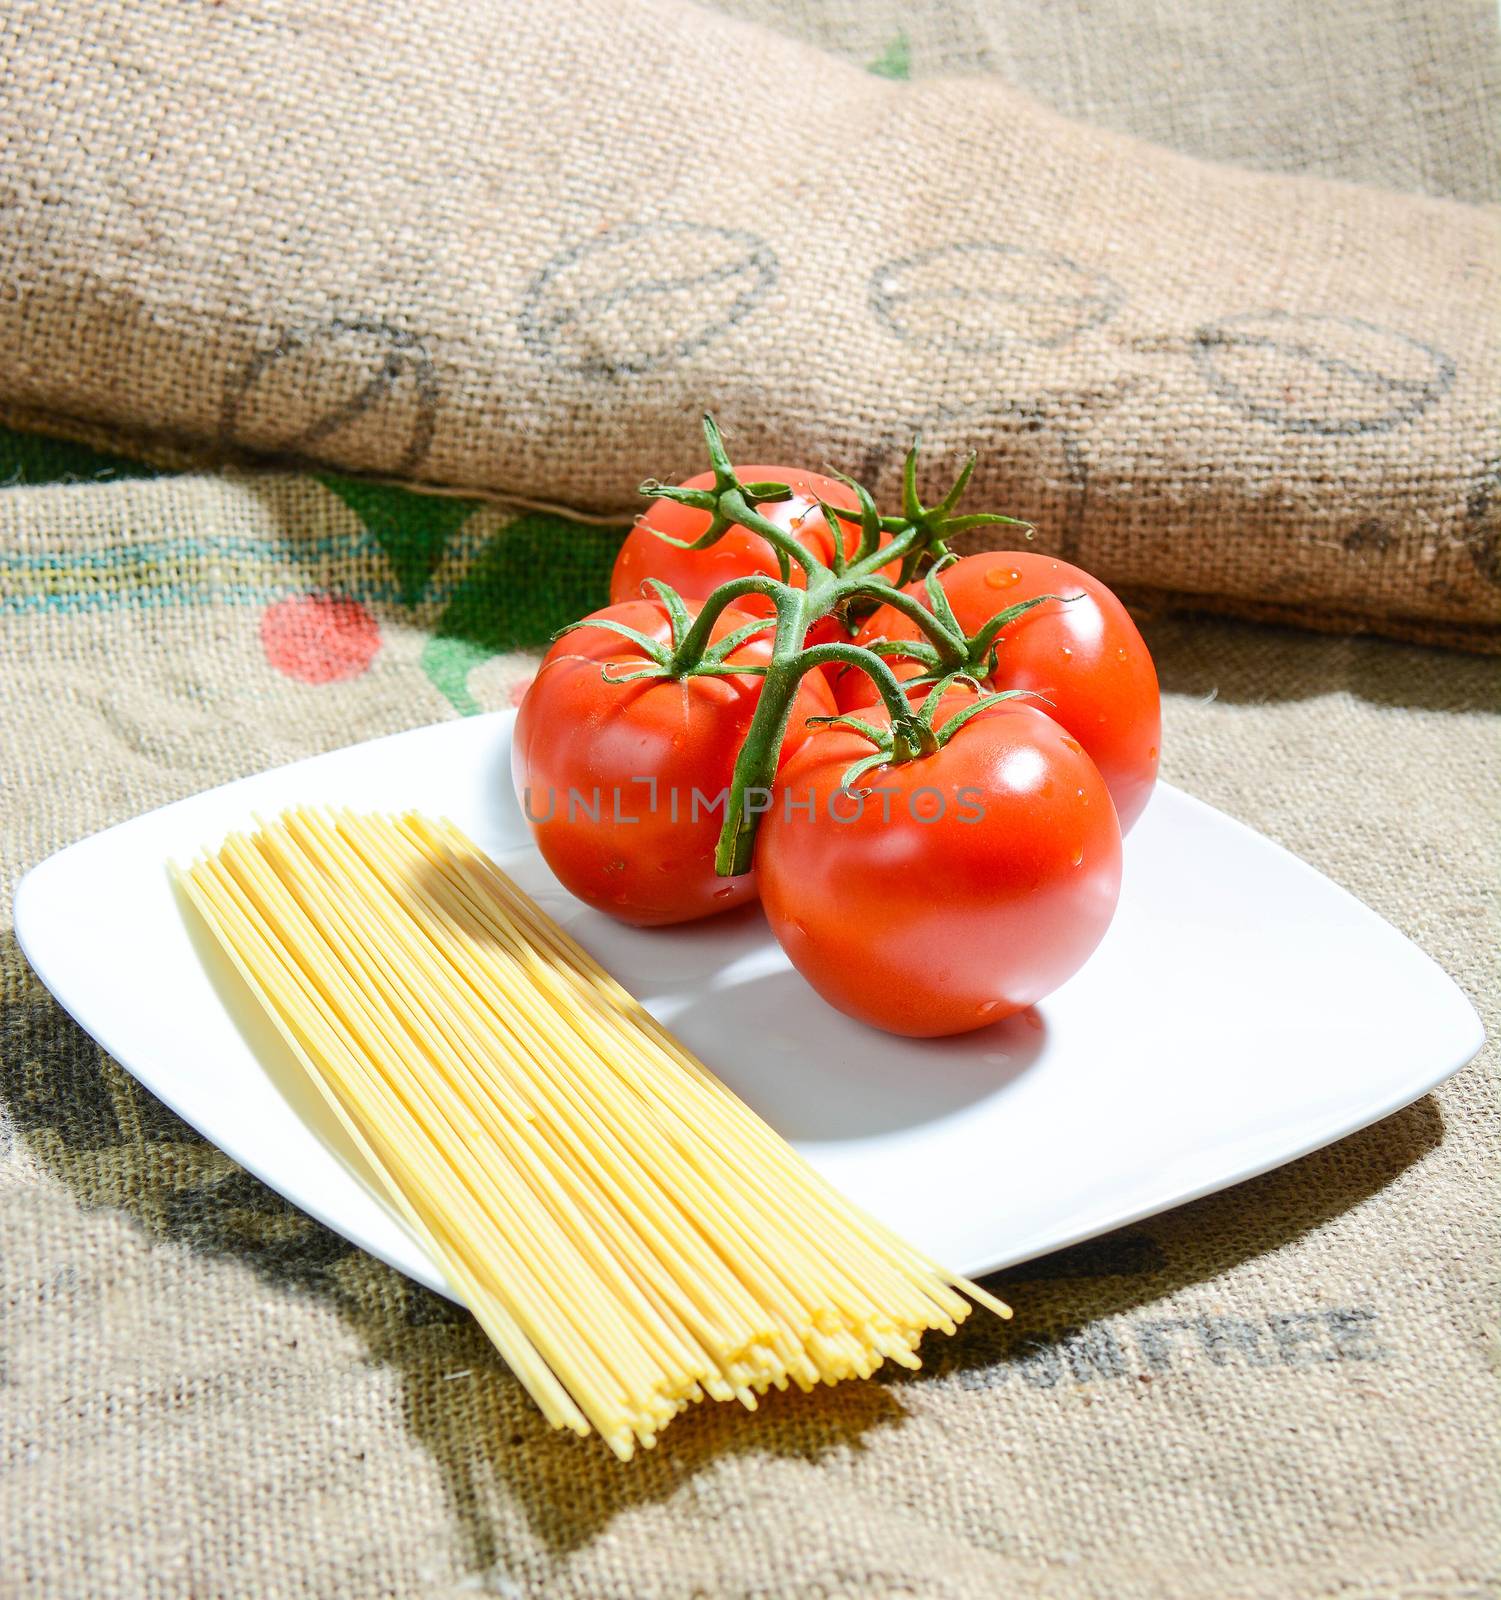 Mediterranean diet recipe by iacobino